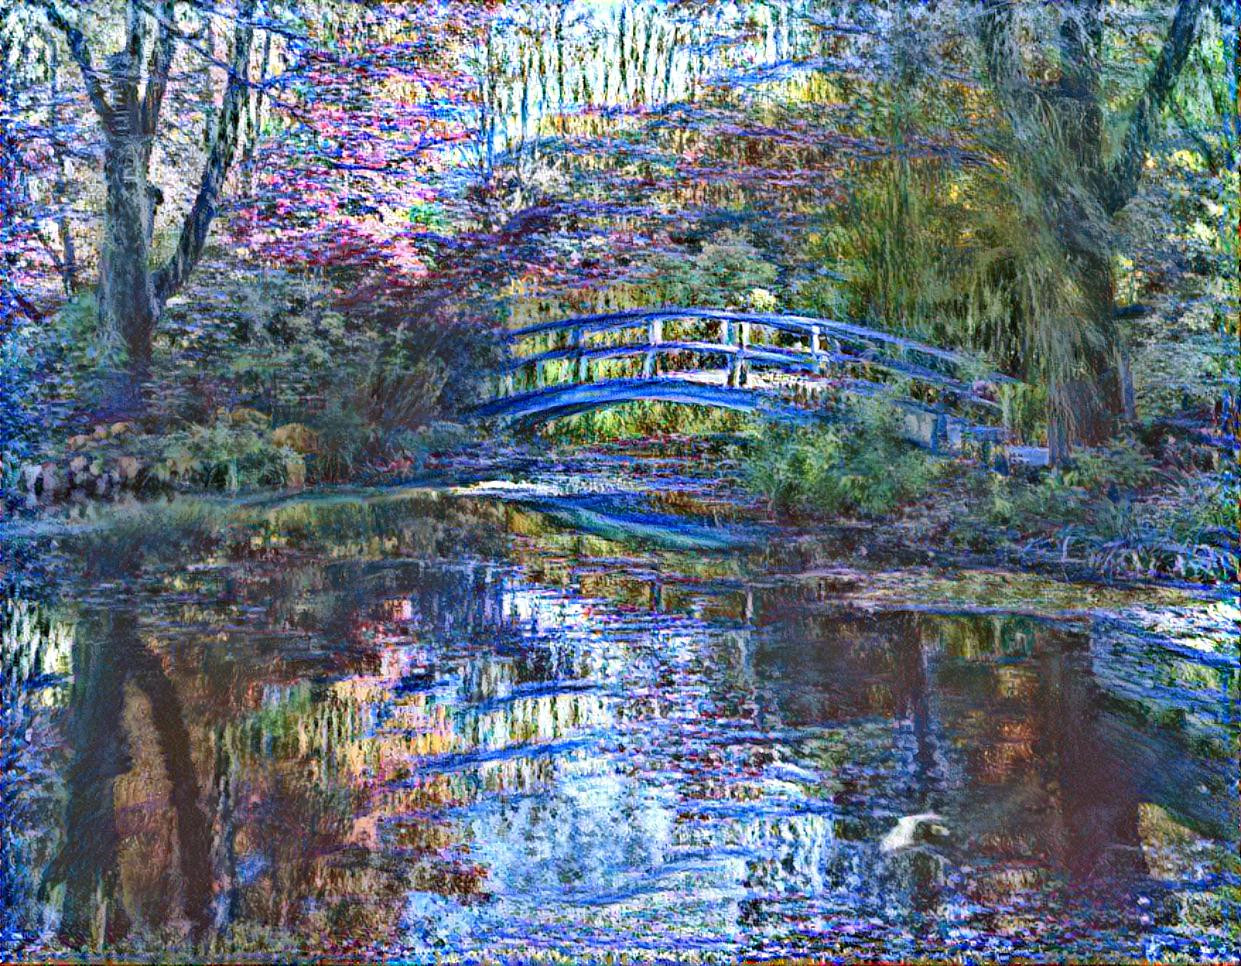 Monet Bridge, Grounds for Sculpture